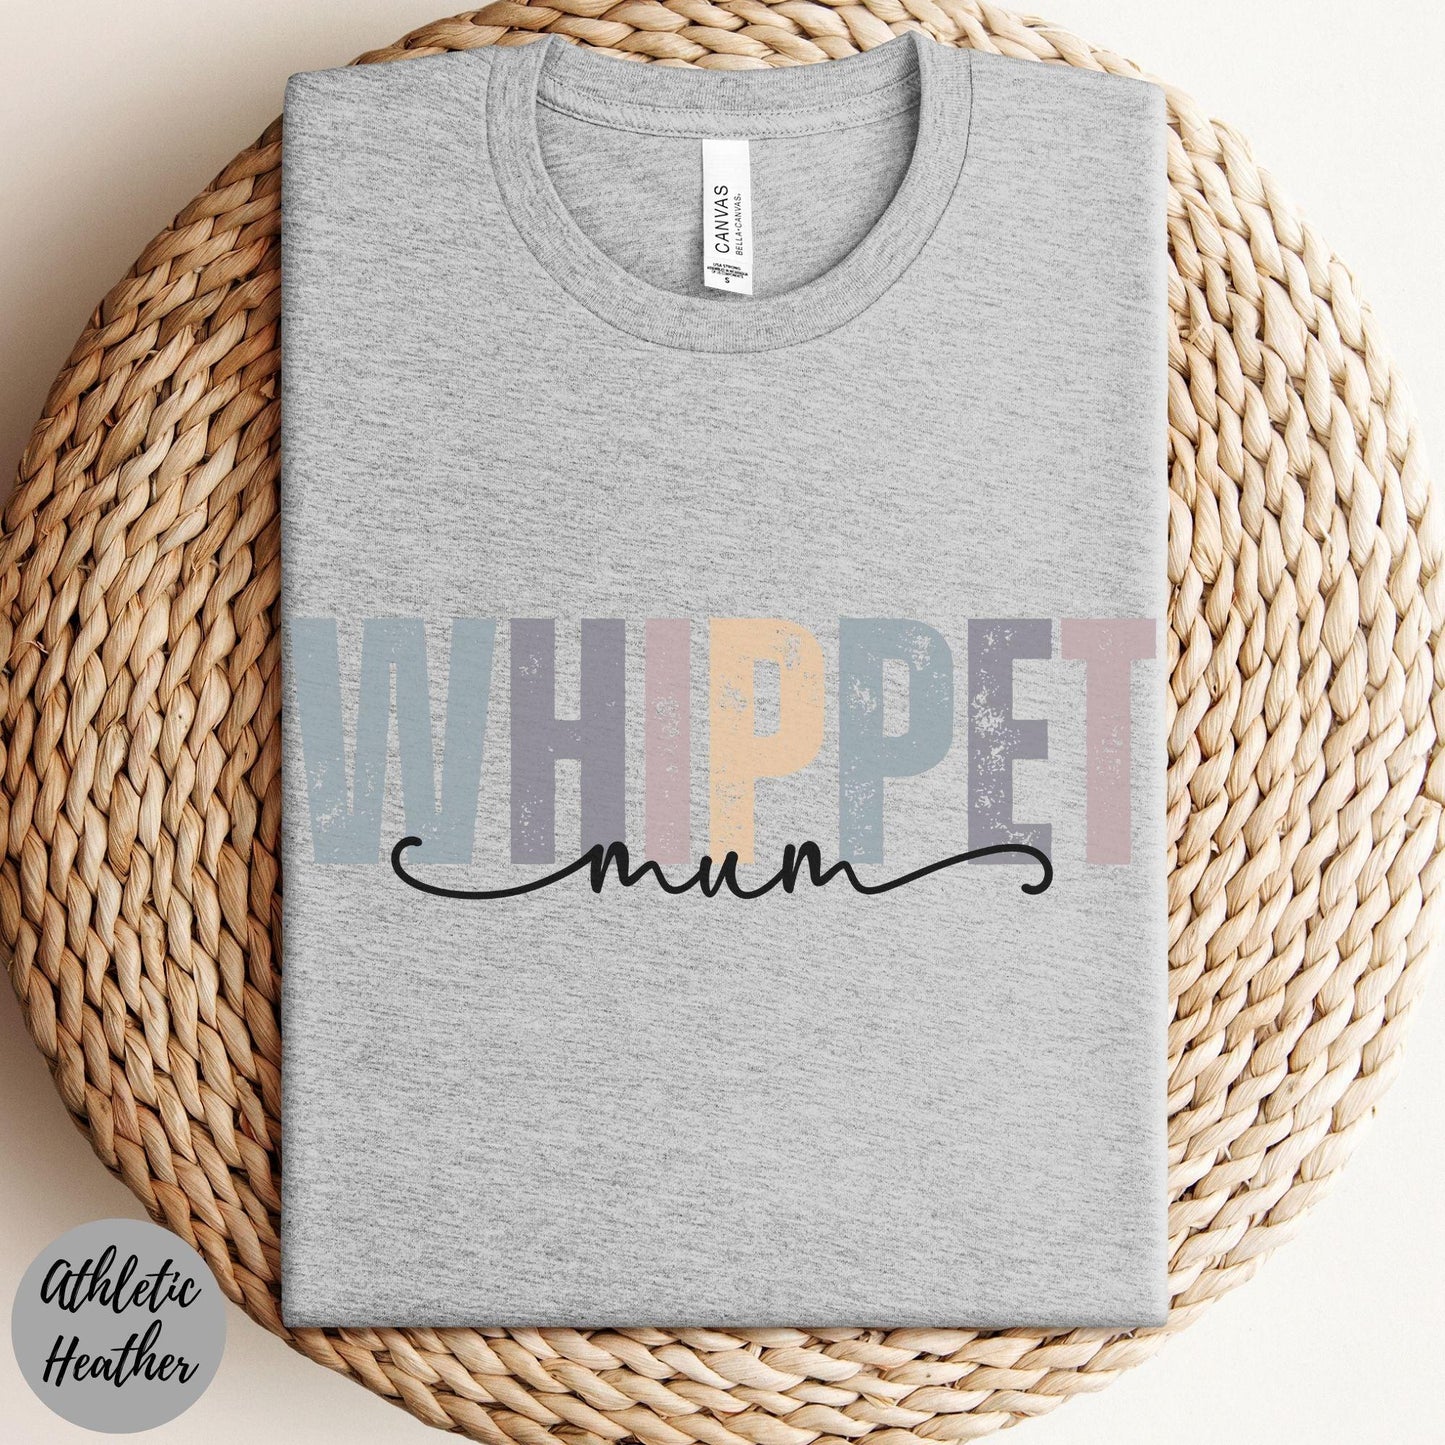 Whippet Mum Tshirt - Happy Greys